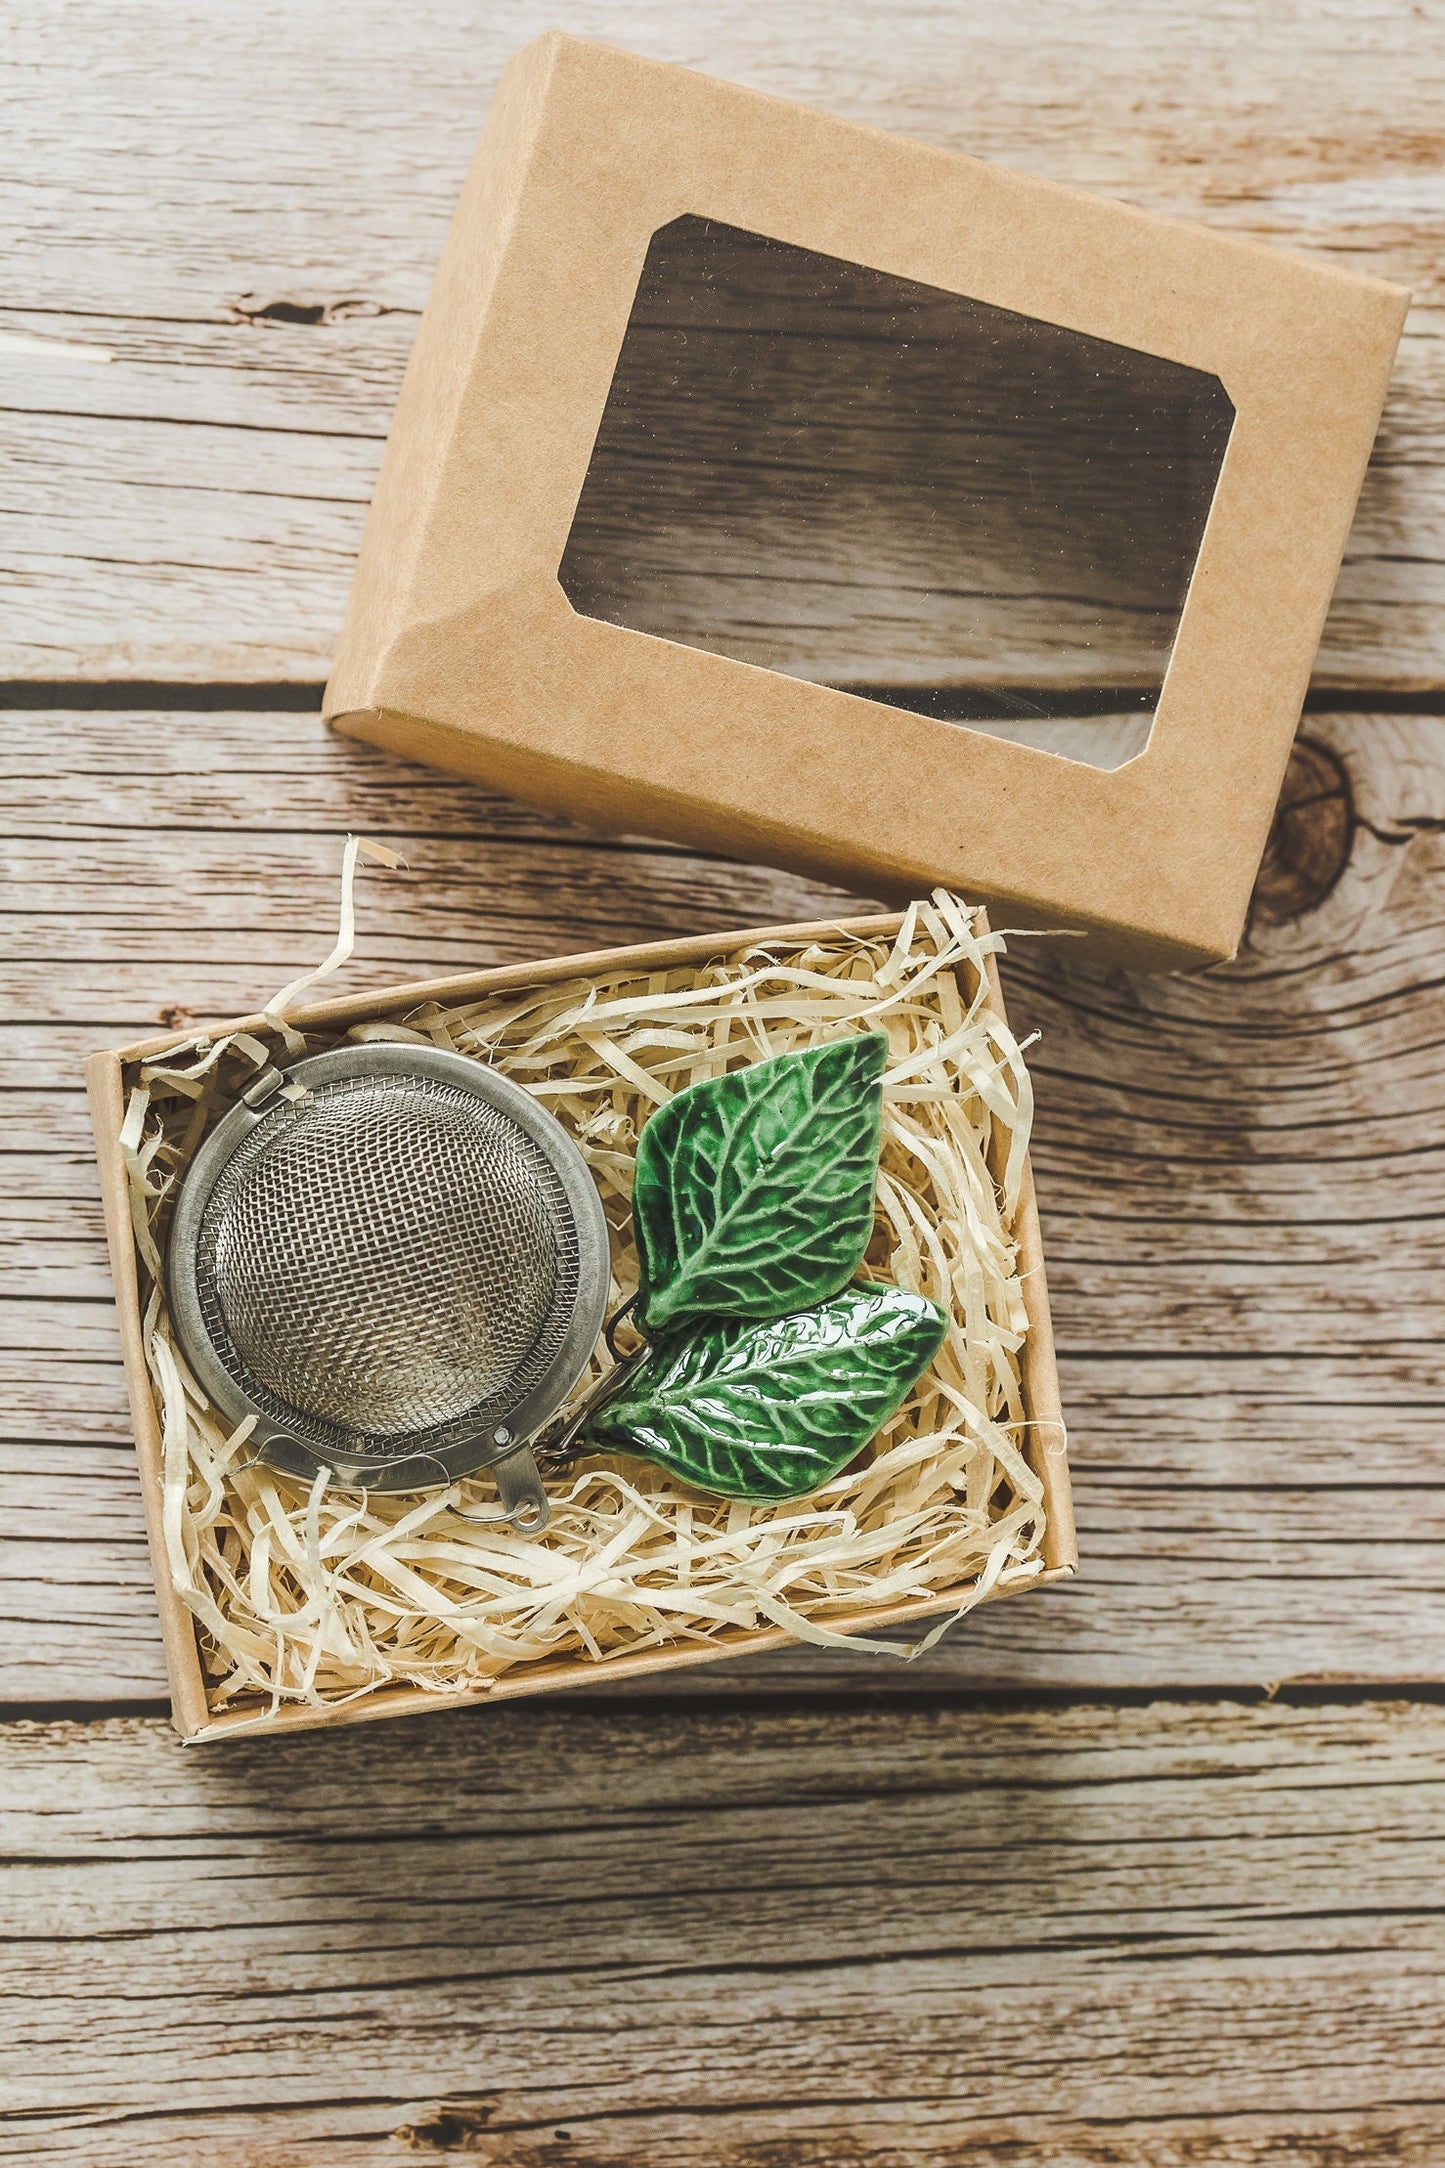 Loose leaf tea strainer - Tea infuser - Tea leaves tea steeper - Mother's day gift - Herbal tea infuser with ceramic charm